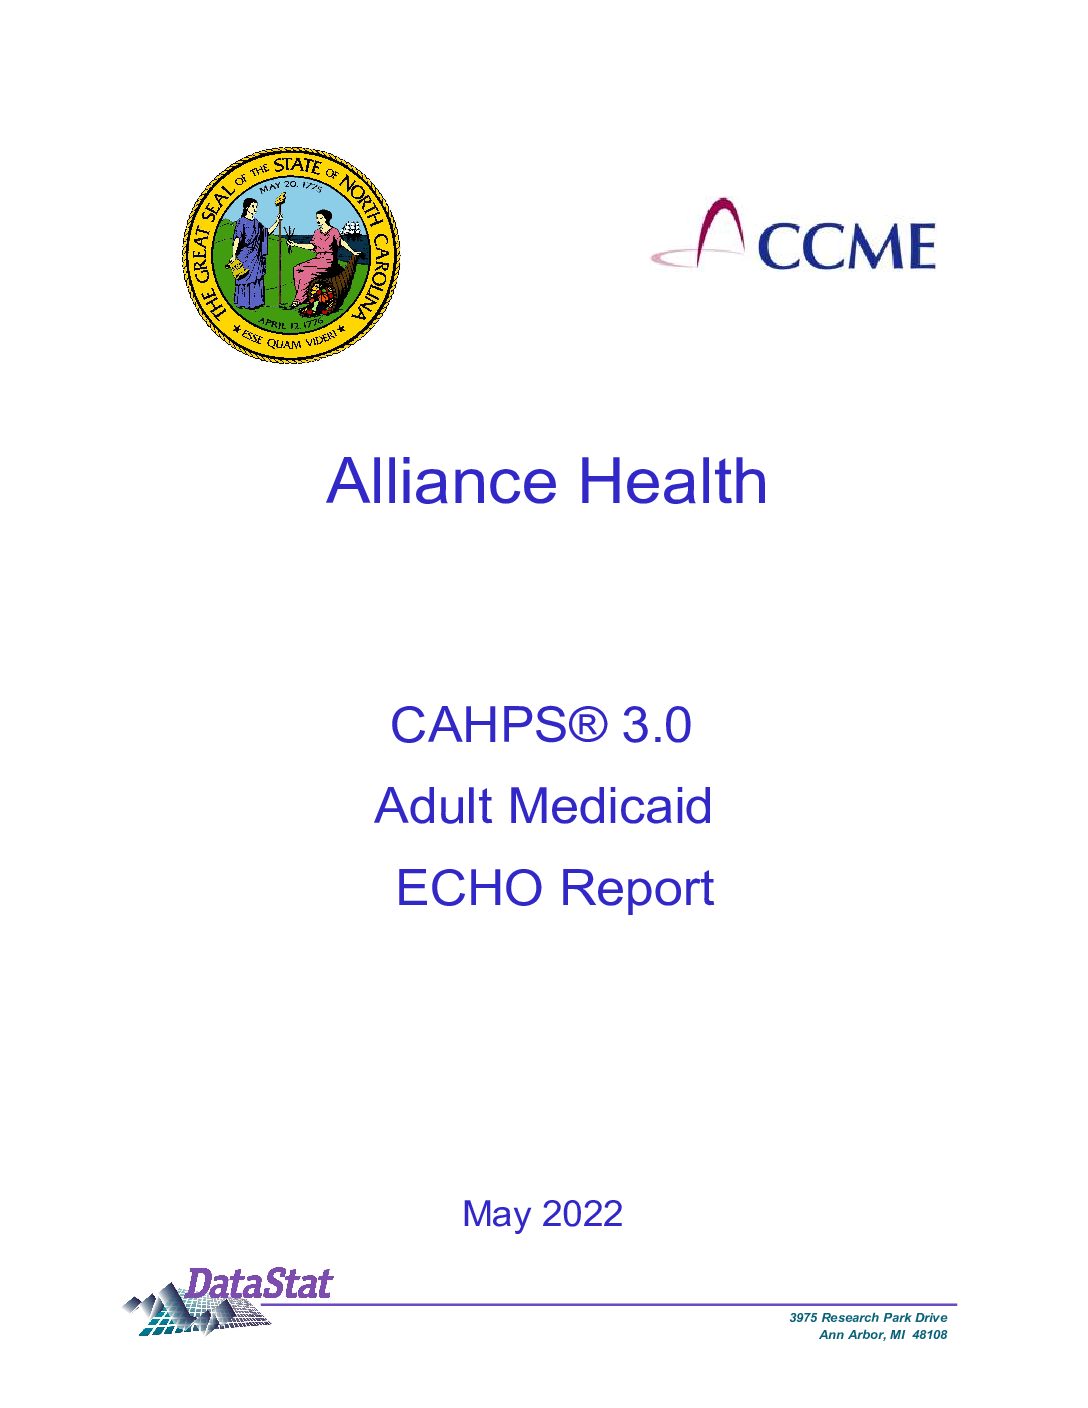 2021 Adult Medicaid ECHO Report